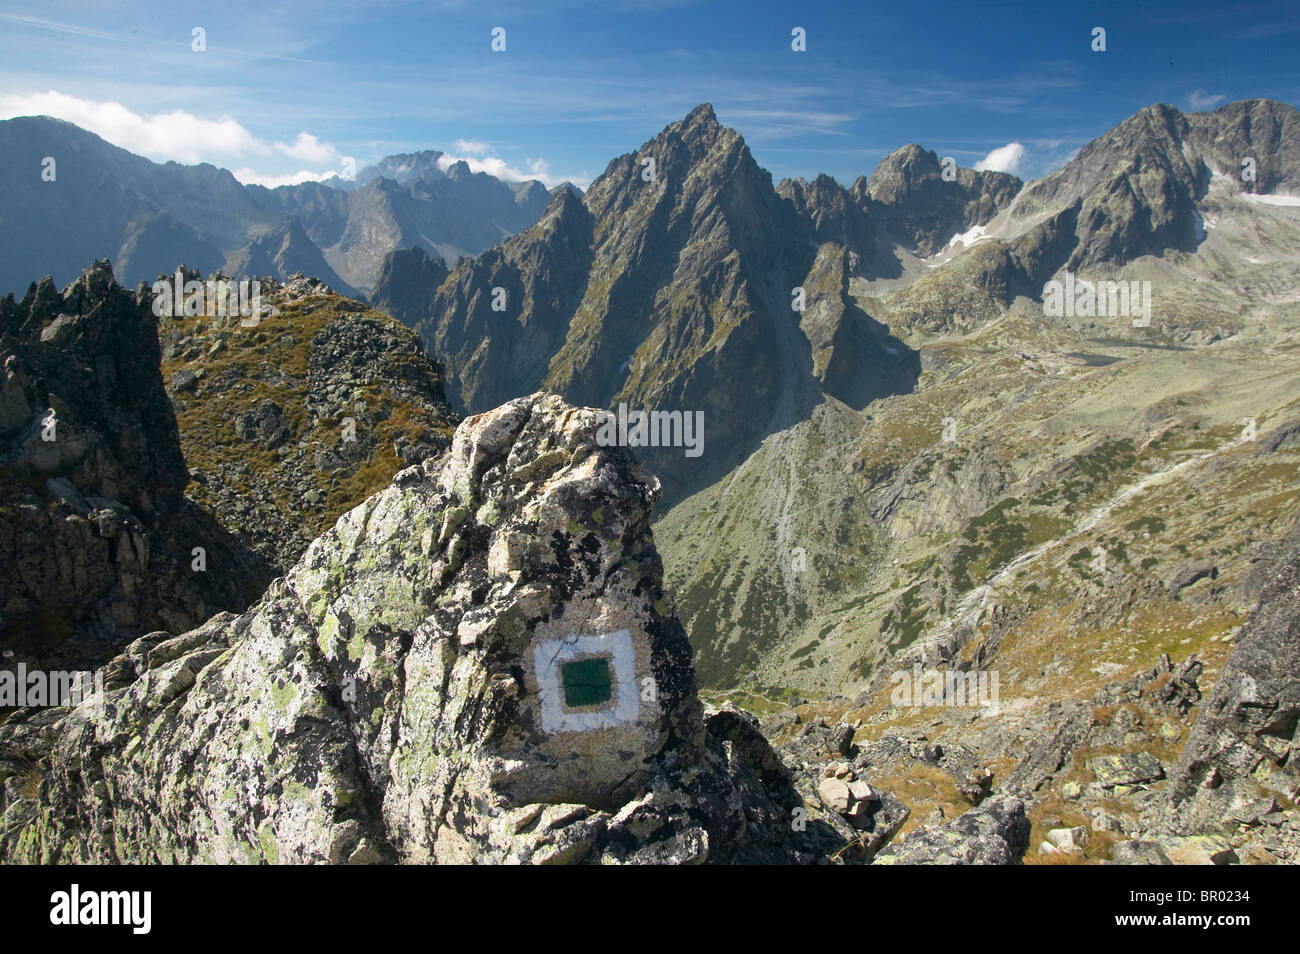 The rocky views of the High Tatra Mountains, Slovakia Stock Photo